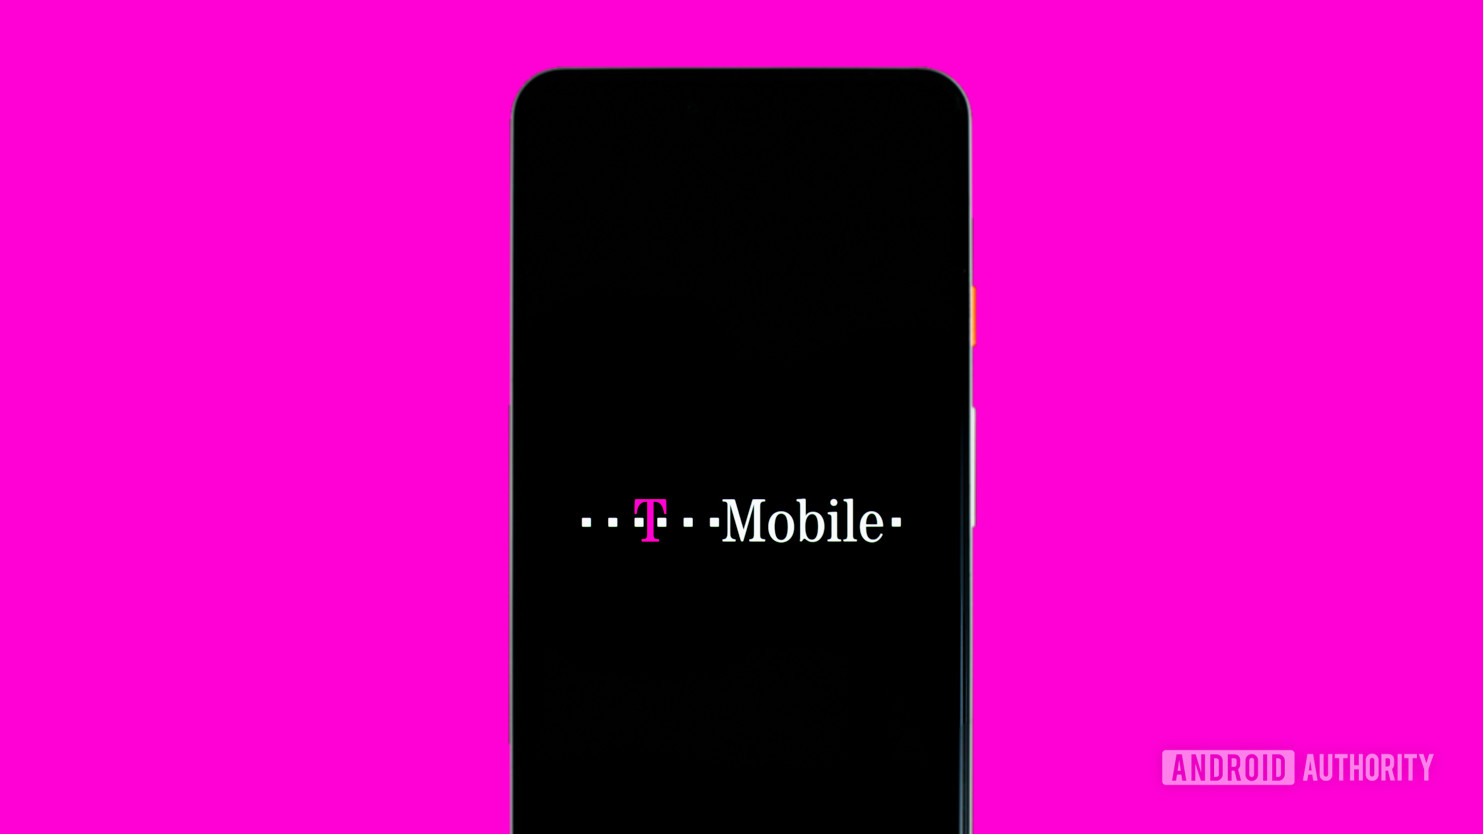 T Mobile logo on phone stock photo